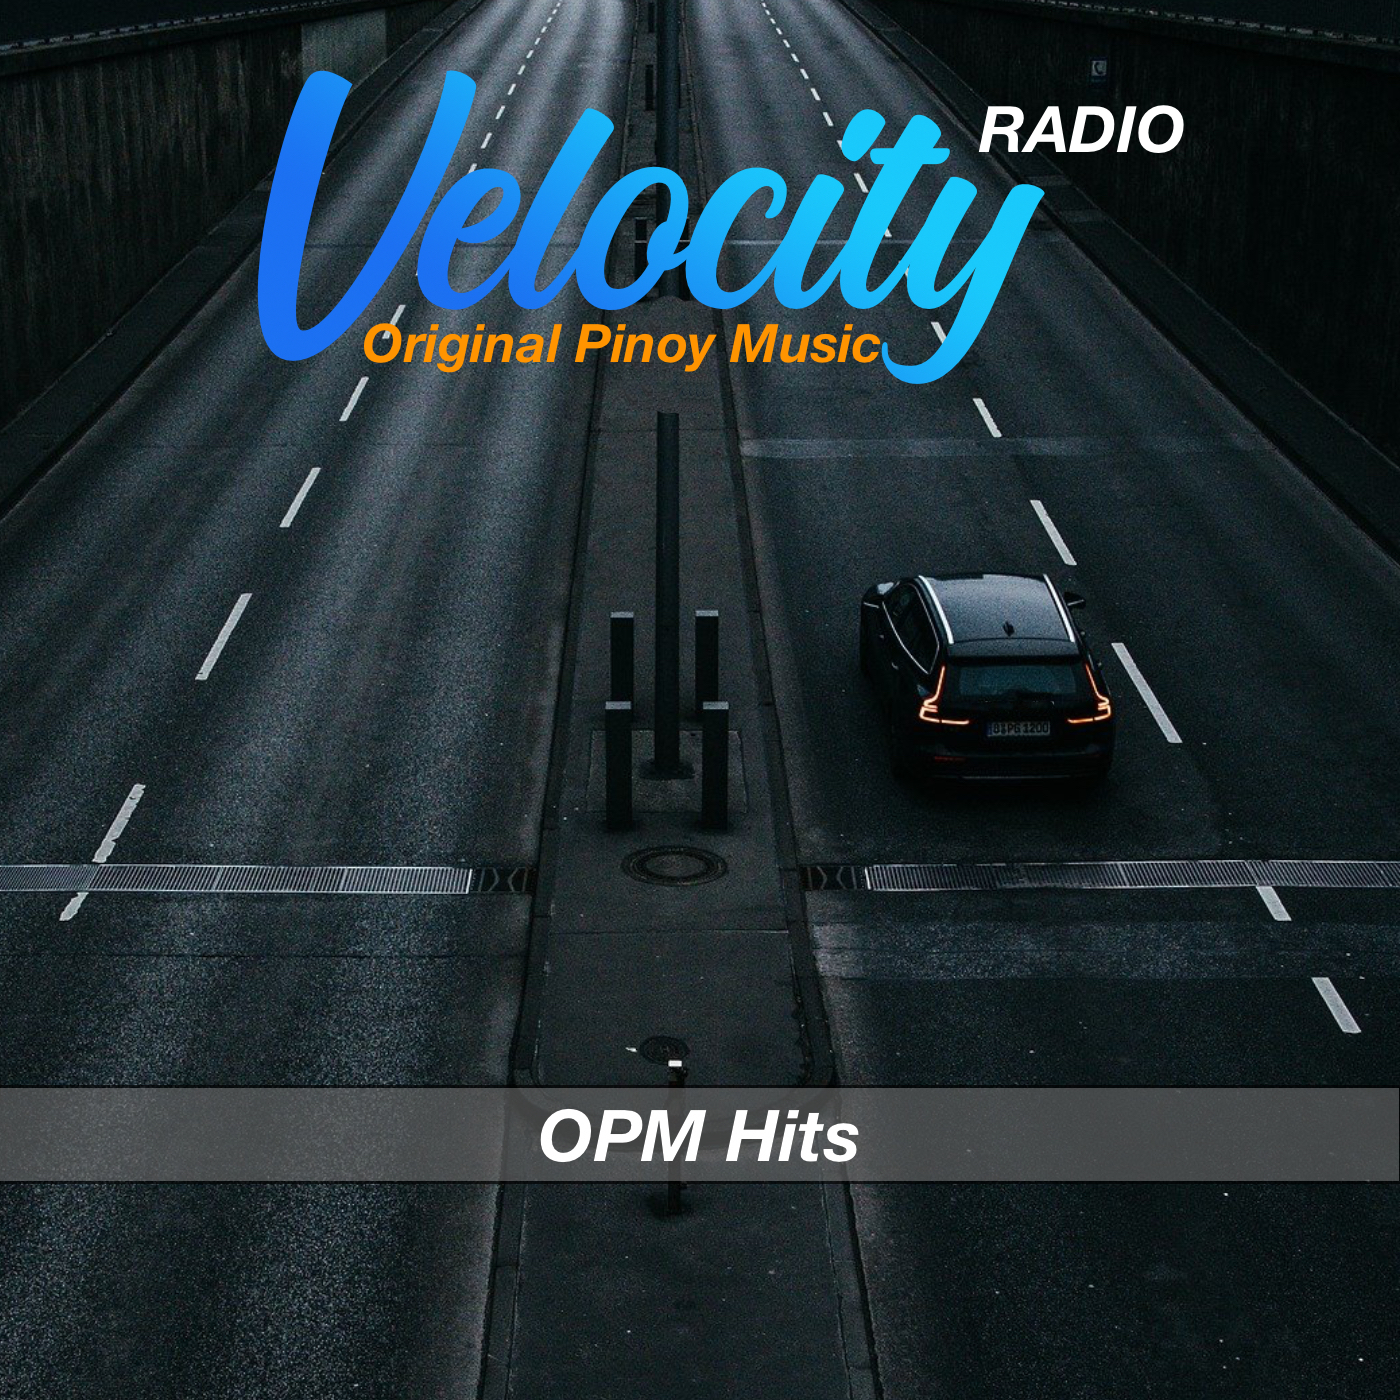 Velocity Radio - Original Pinoy Music